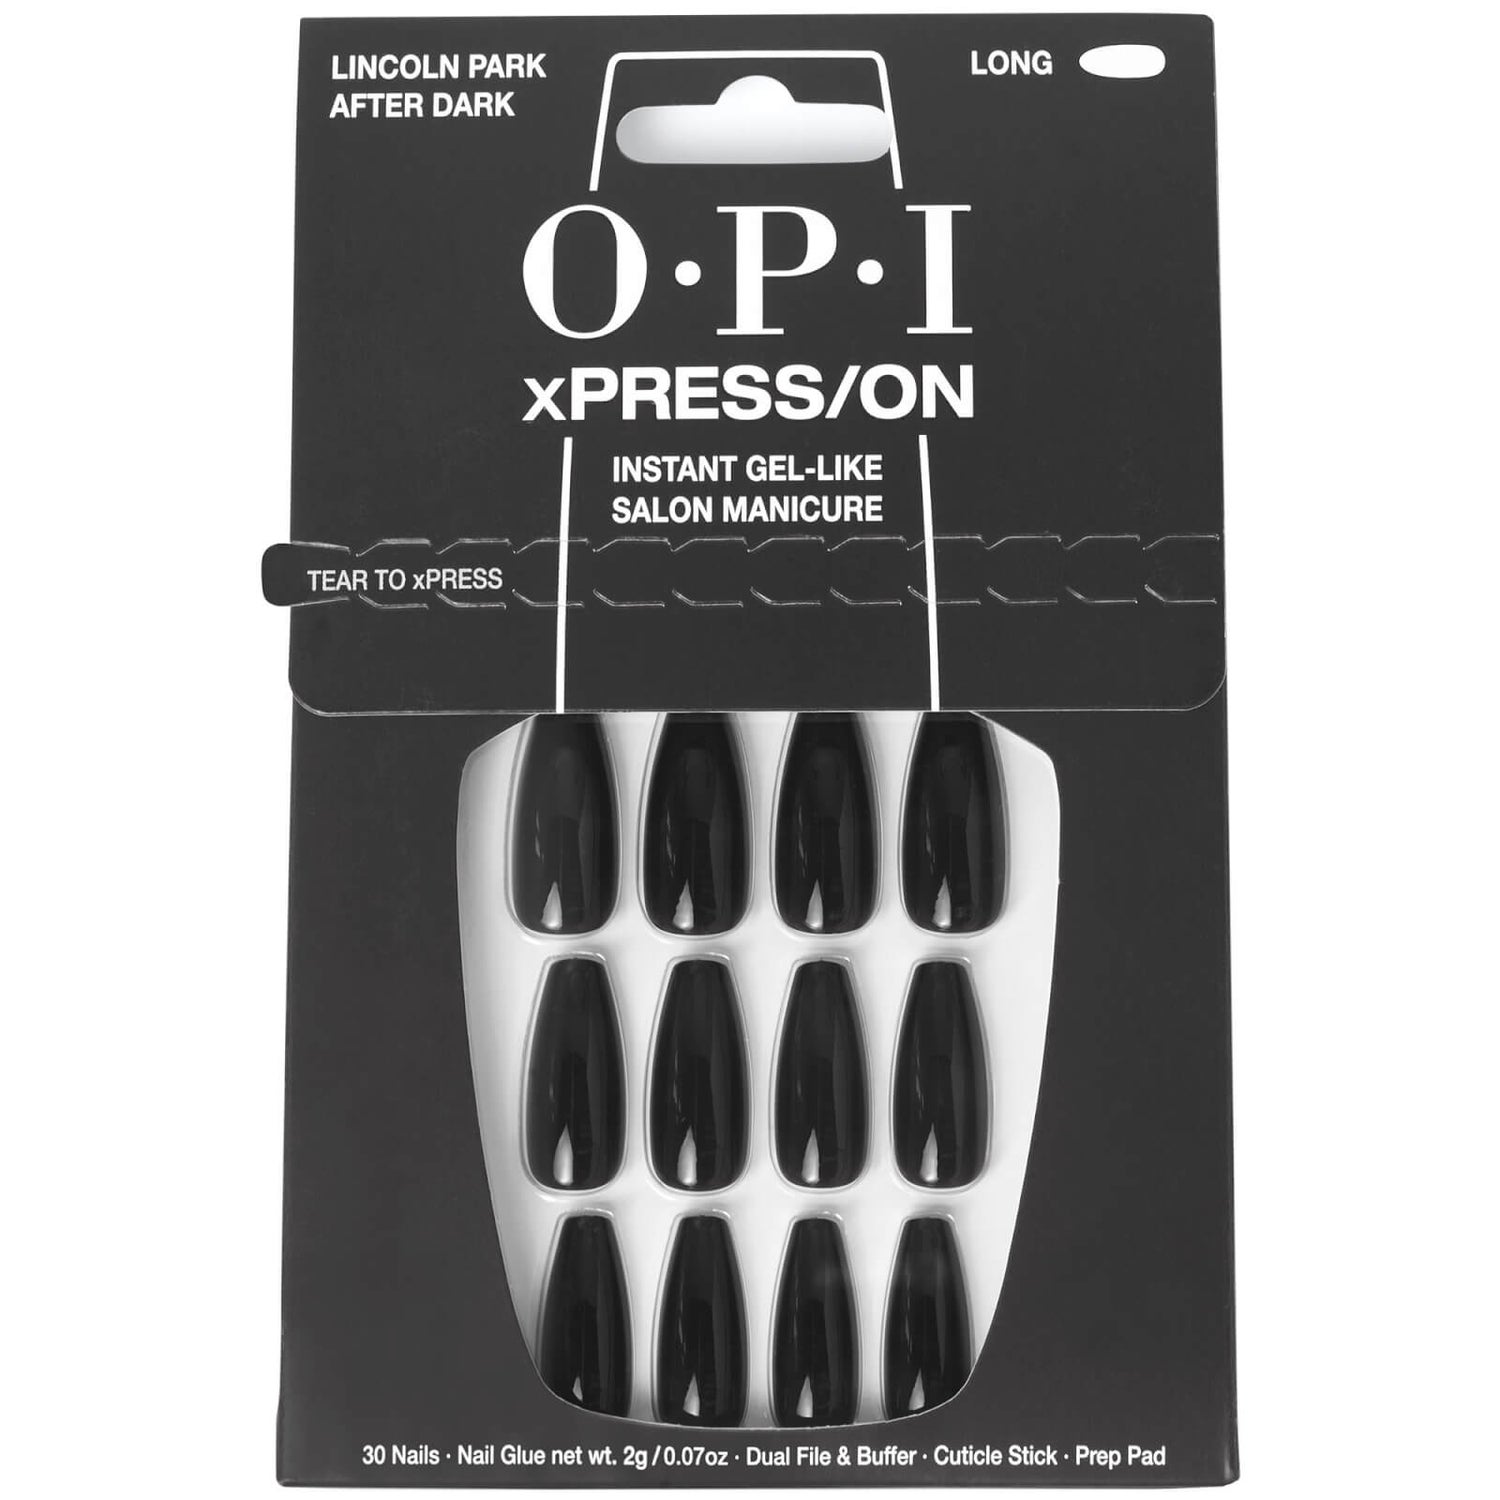 OPI xPRESS/ON - Lincoln Park After Dark - LONG Press On Nails Gel-Like Salon Manicure